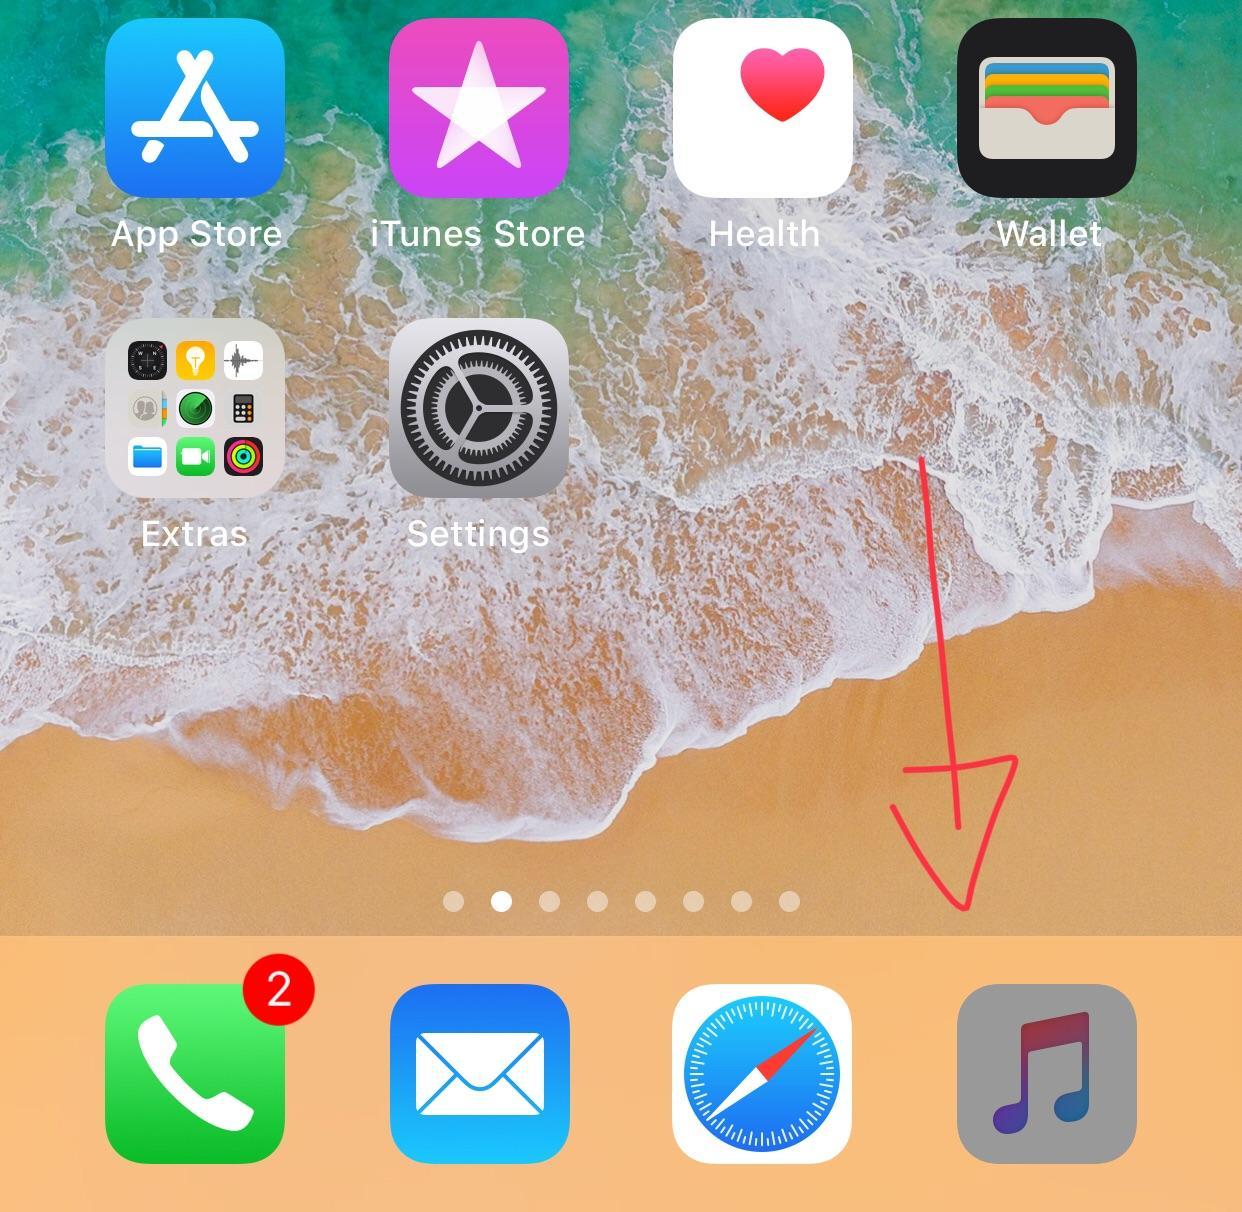 Safari App Logo - Why does music app icon go dark? happens with safari too. : iphone